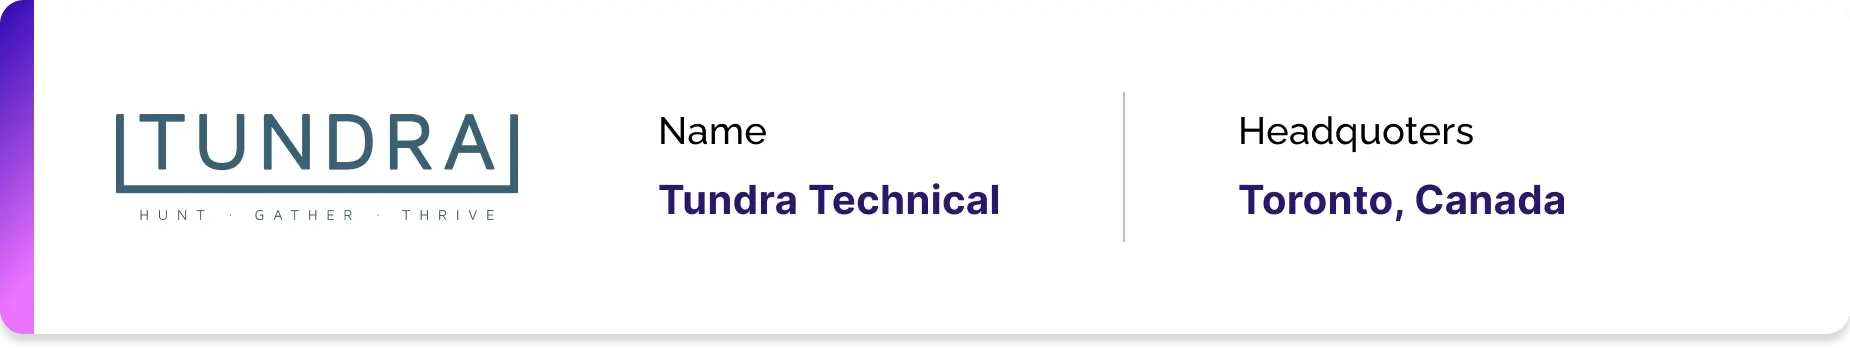 Tundra Technical